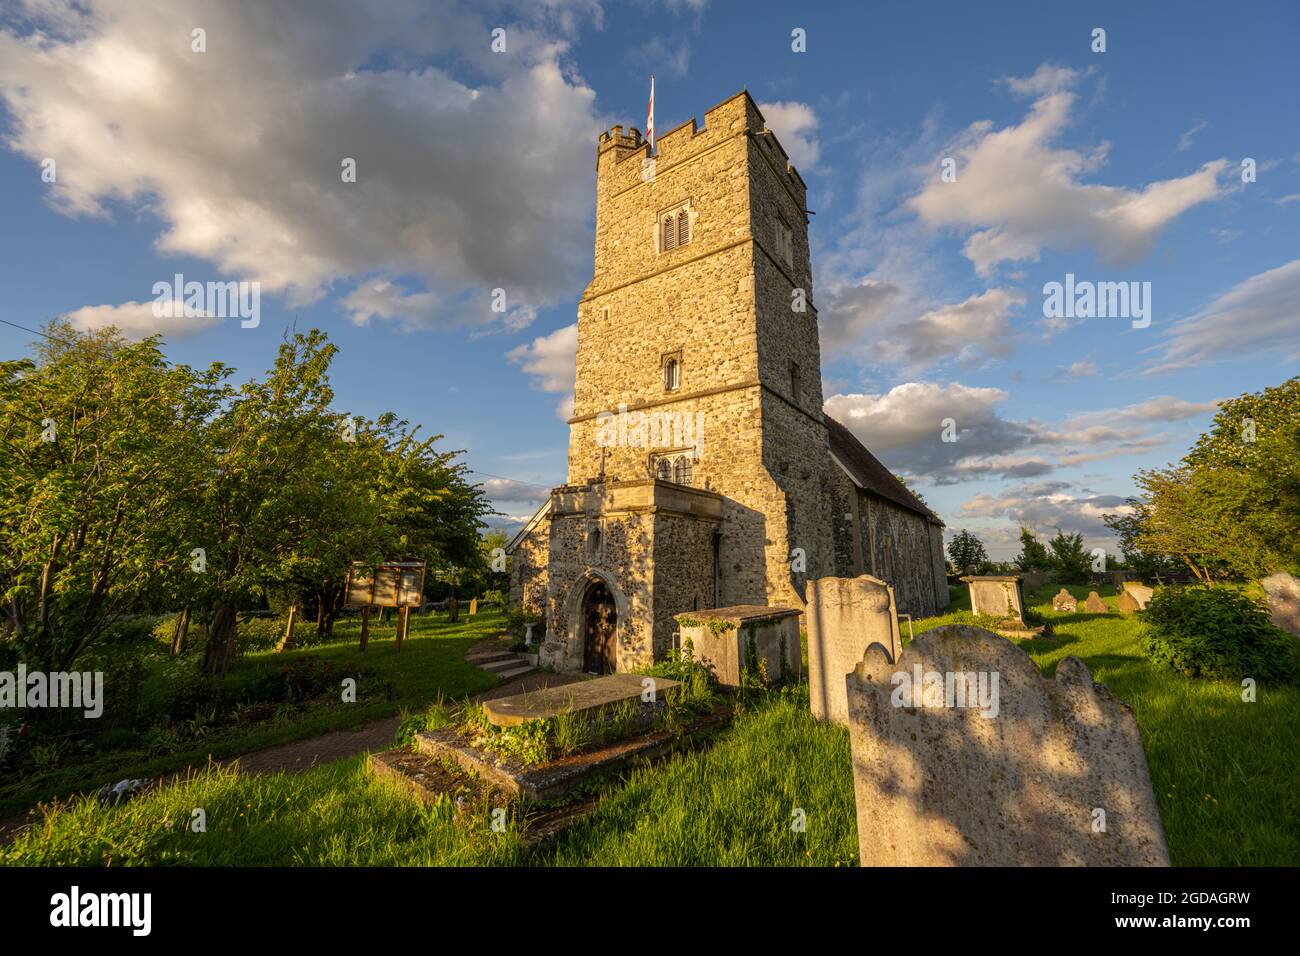 Saint Mary’s church Chalk, near Gravesend, Kent. Taken at Sunset Stock Photo